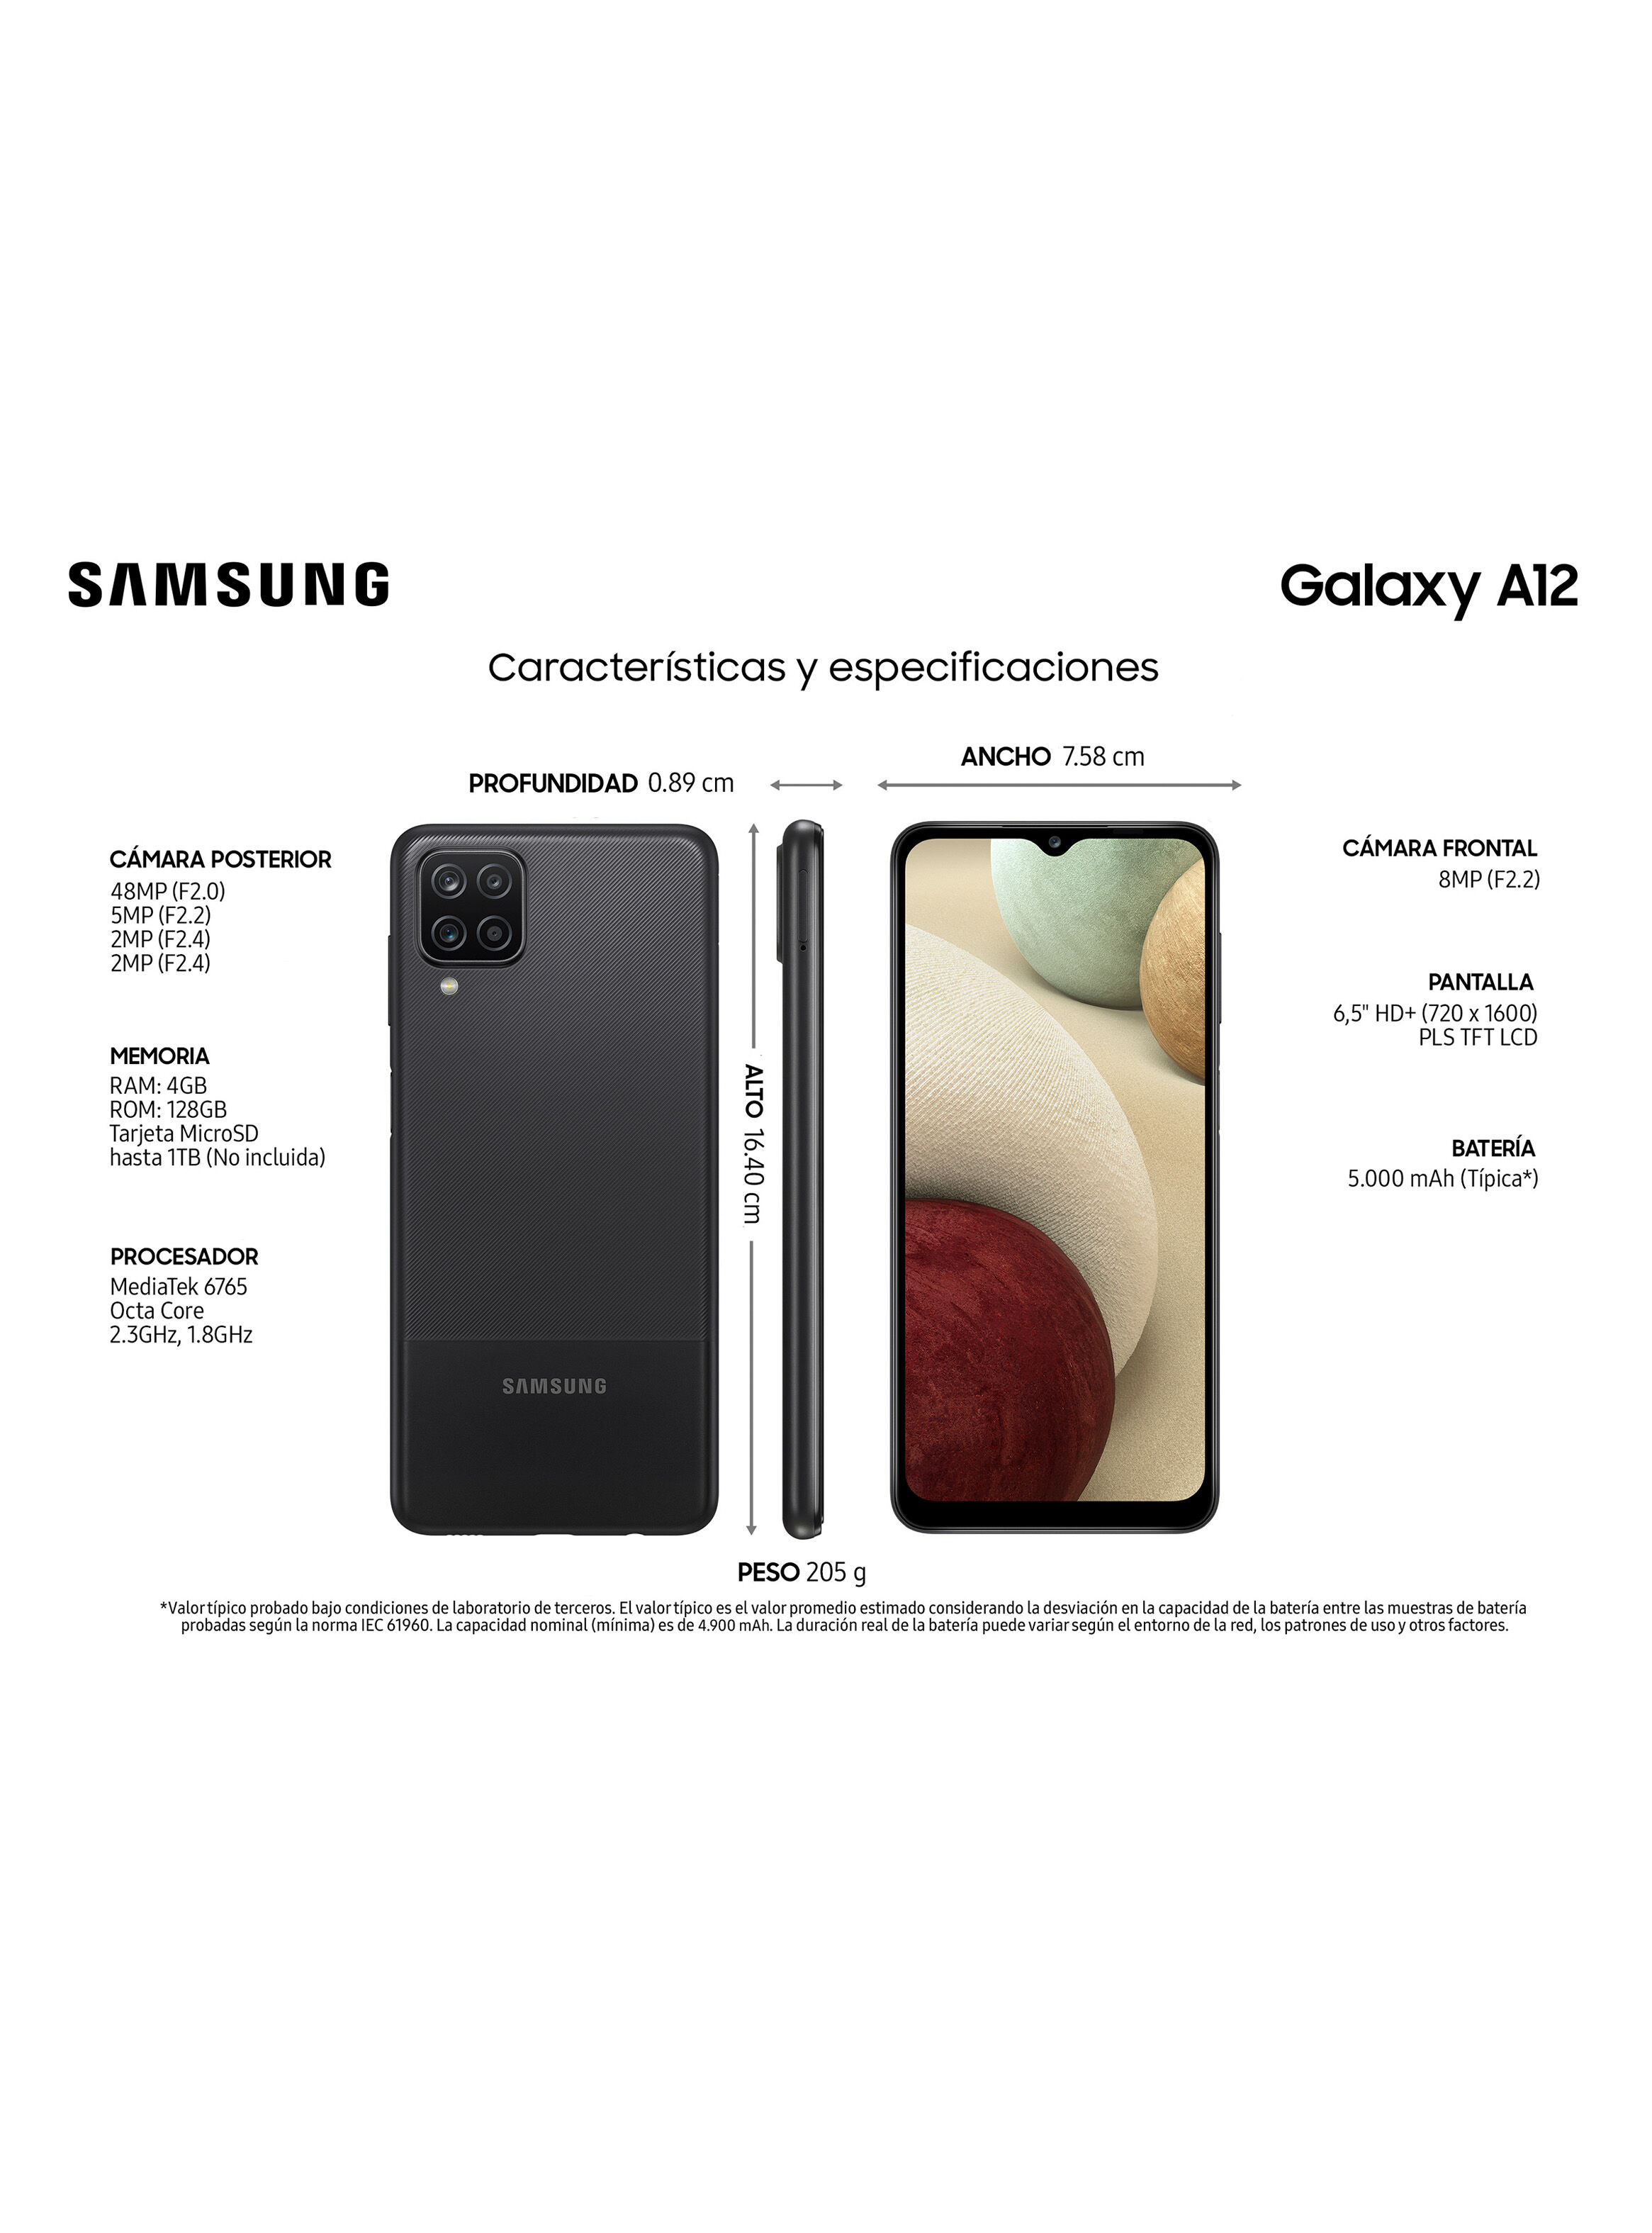 Размер самсунг а50. Самсунг а 12 32гб. Самсунг а 12 128гб. Samsung Galaxy a12 4/64gb характеристики. Самсунг галакси а 12 Размеры.